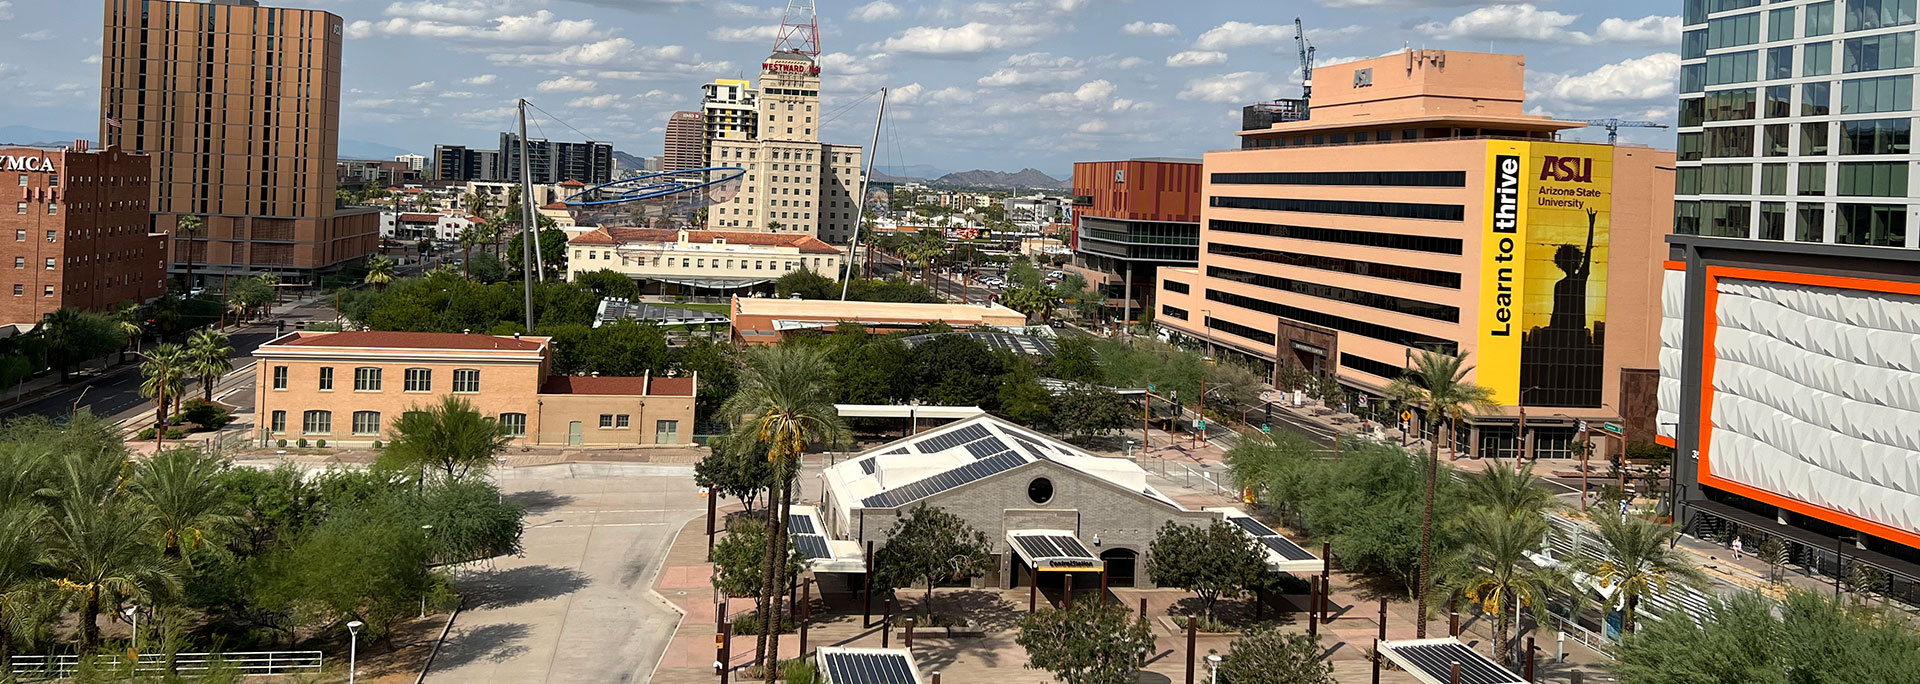 ASU Downtown Phoenix campus 